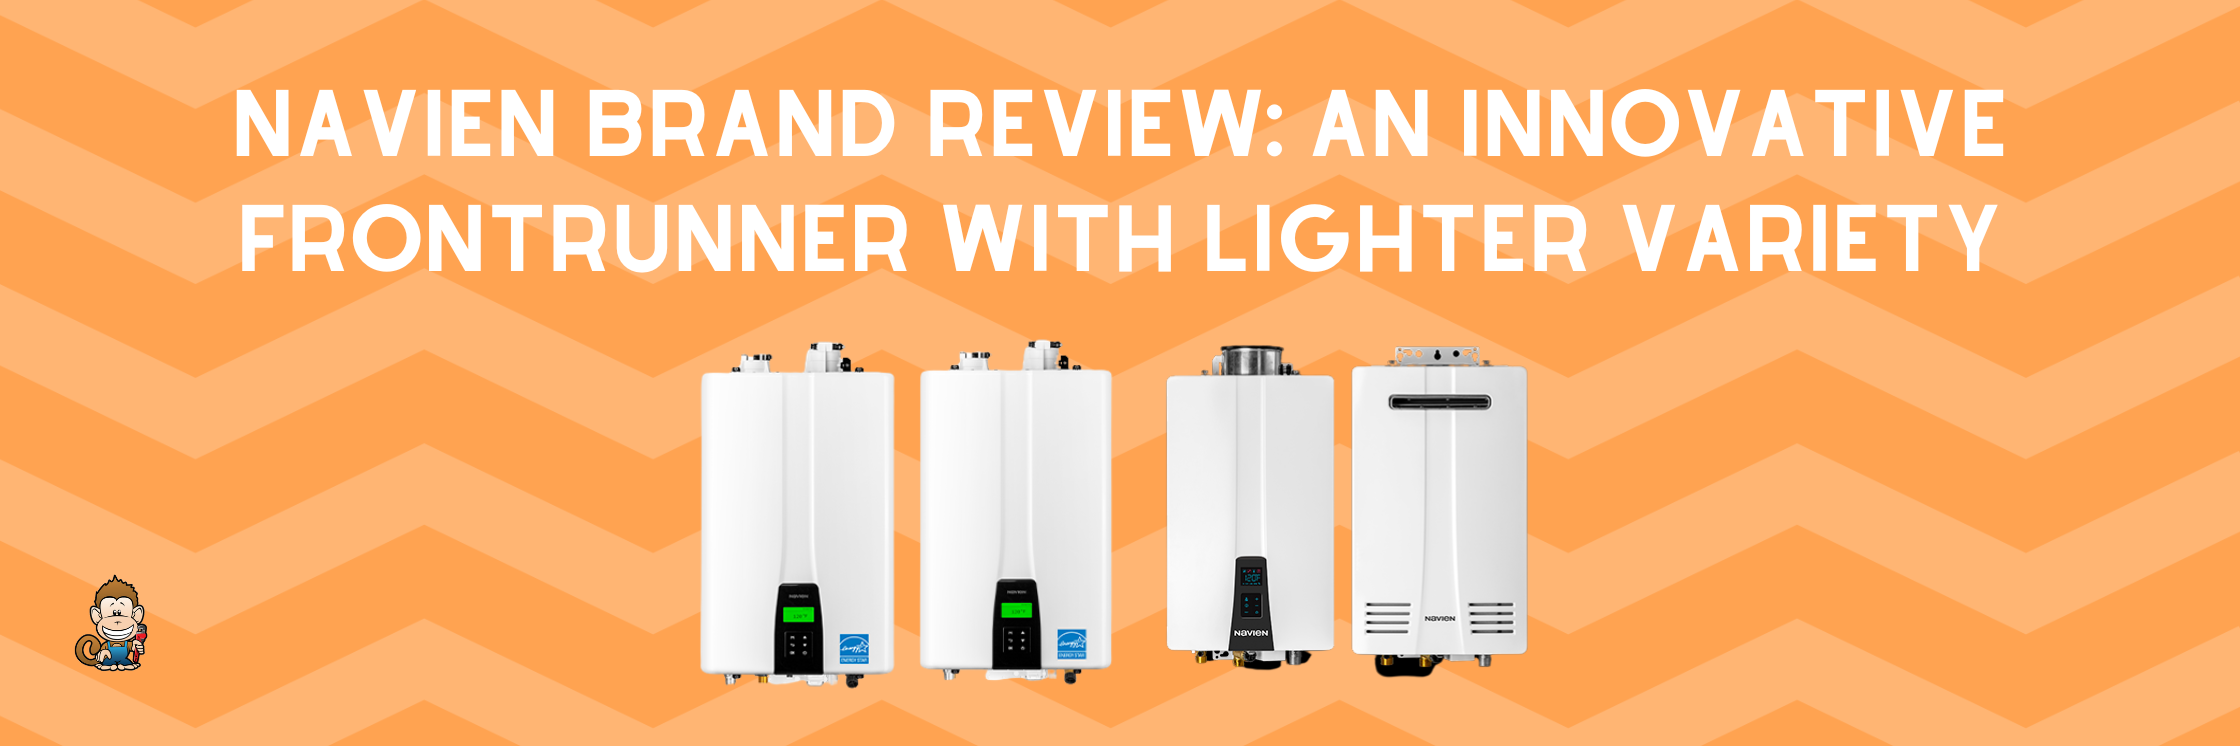 Navien Brand Review: An Innovative Frontrunner with Lighter Variety